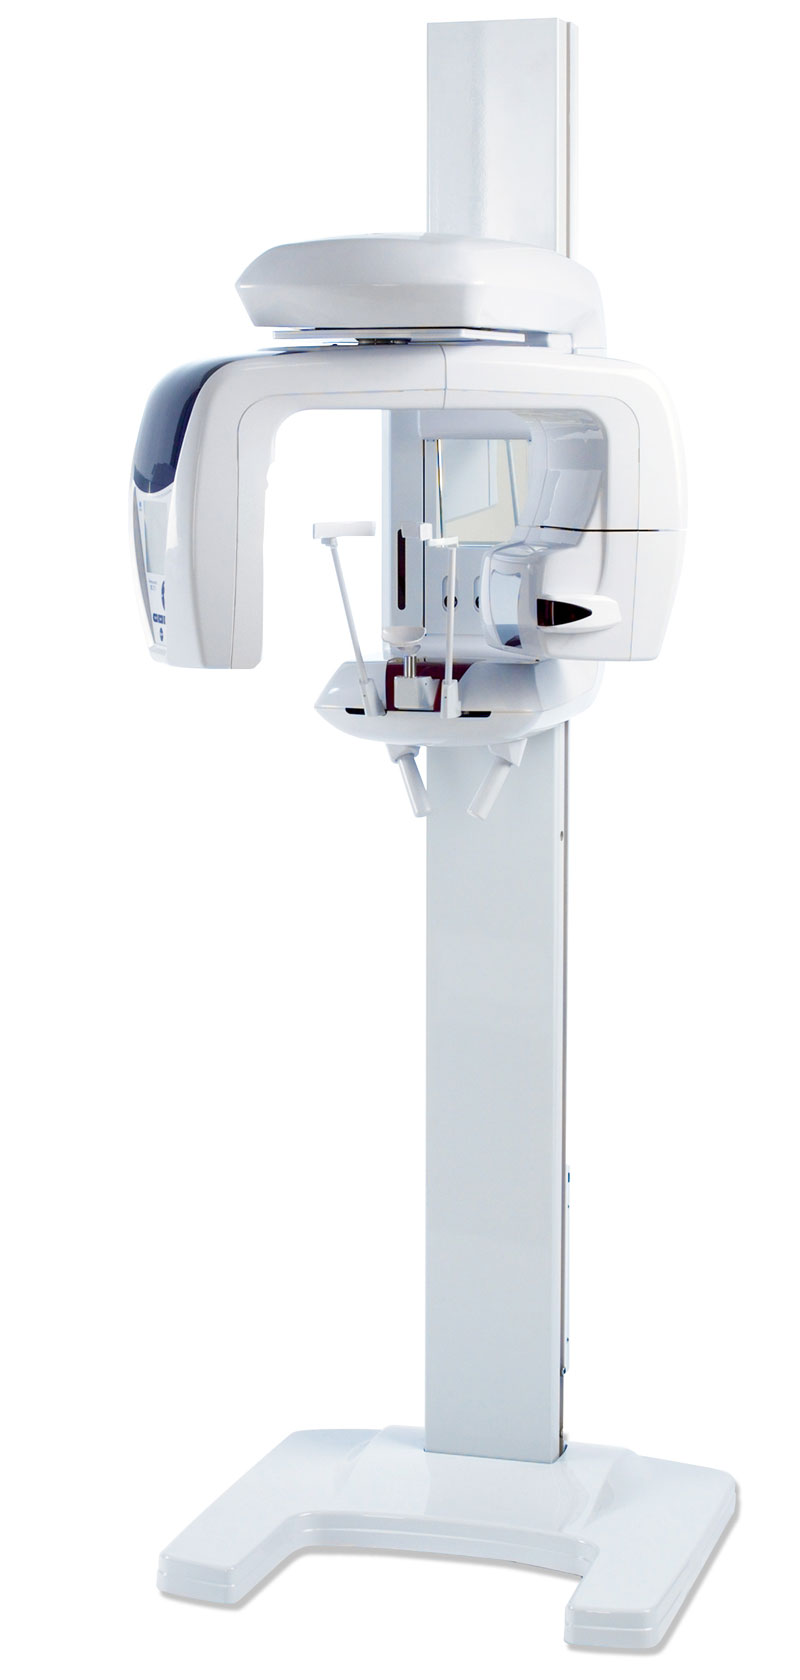 Chatham Dental Centre's new 3D CT Scanner